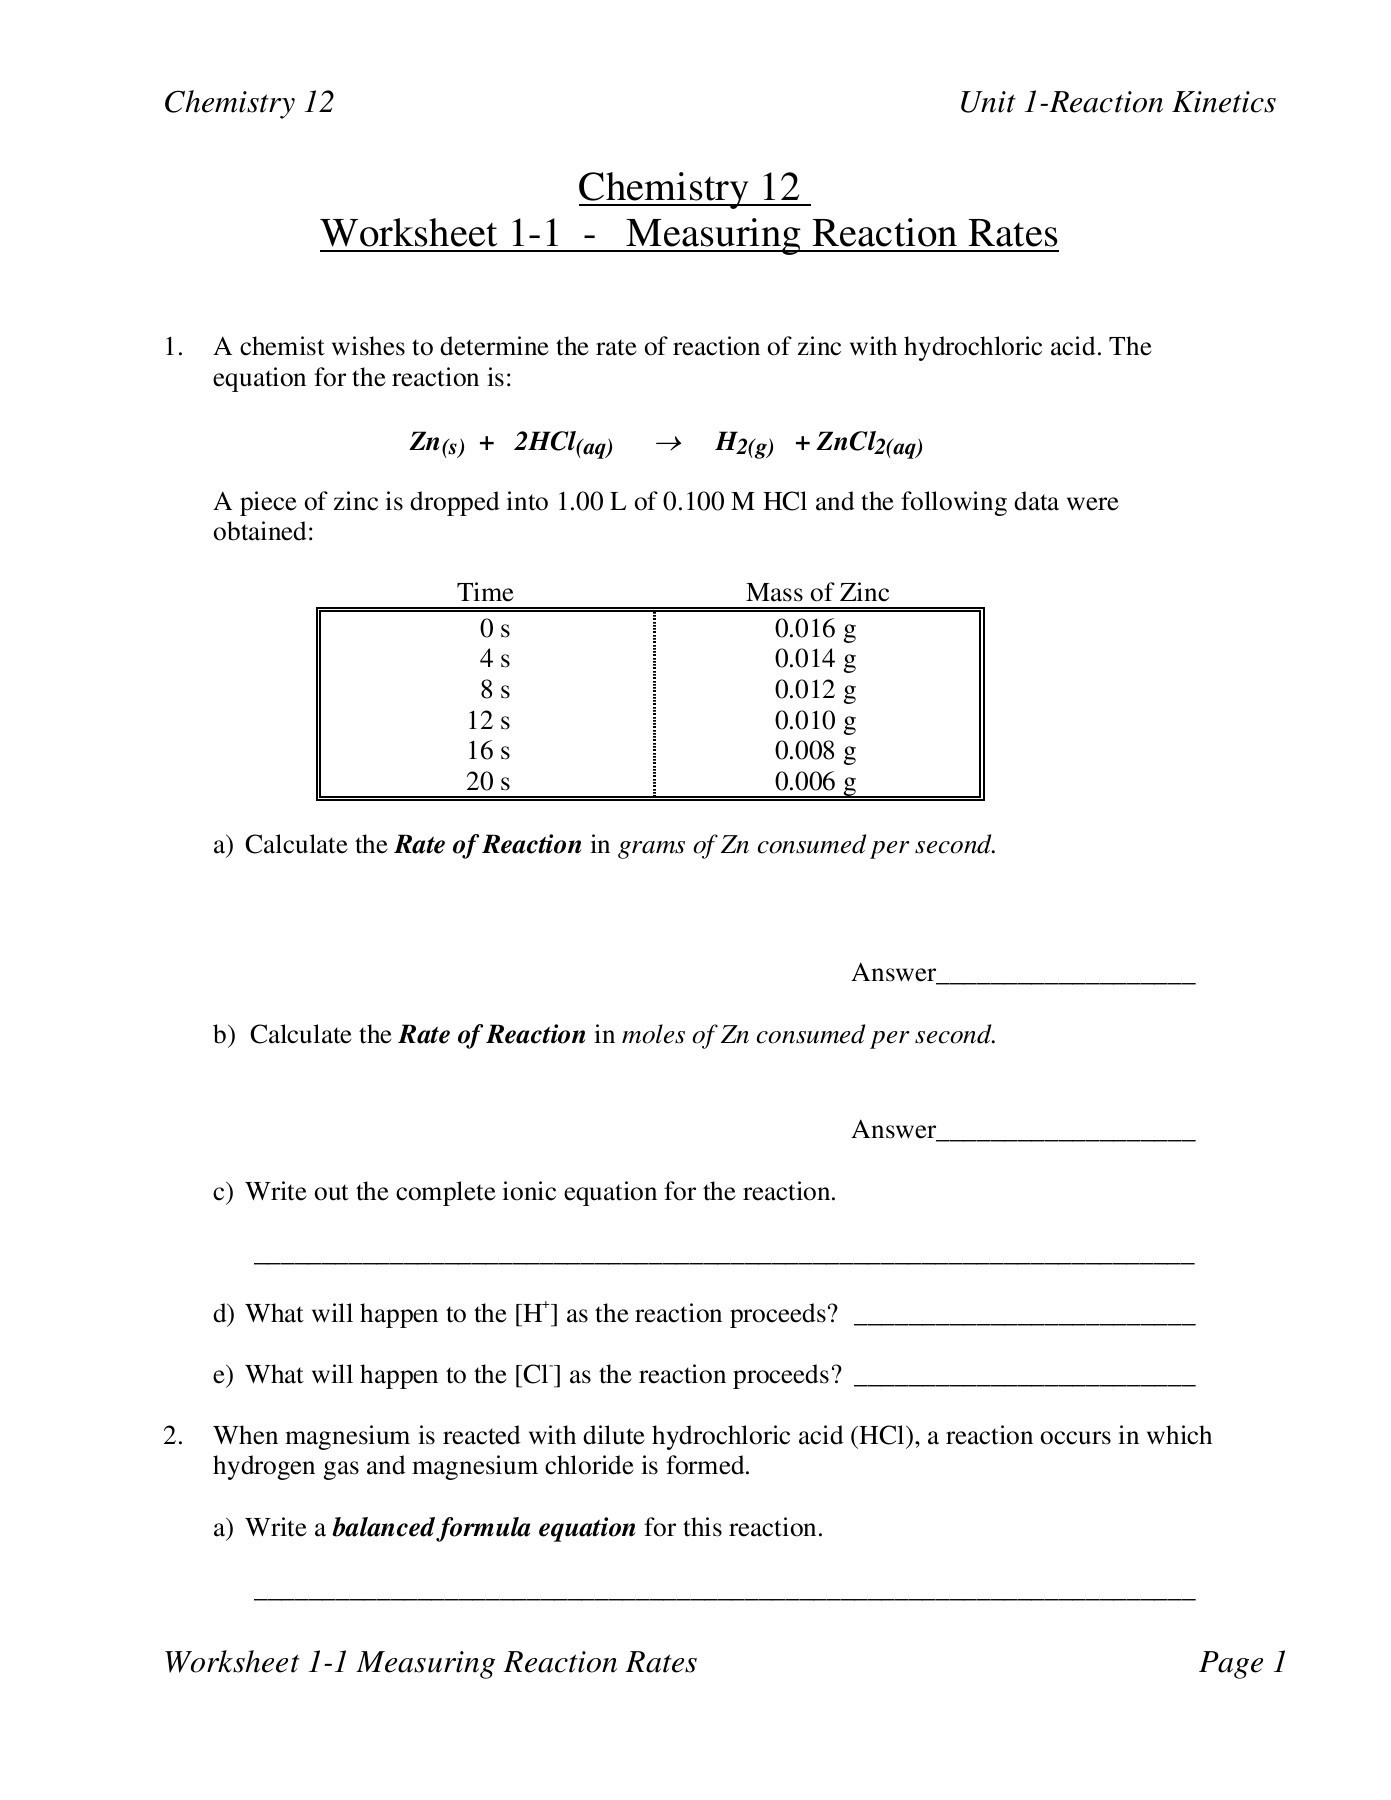 Reaction Rates Worksheet Multiple Choice